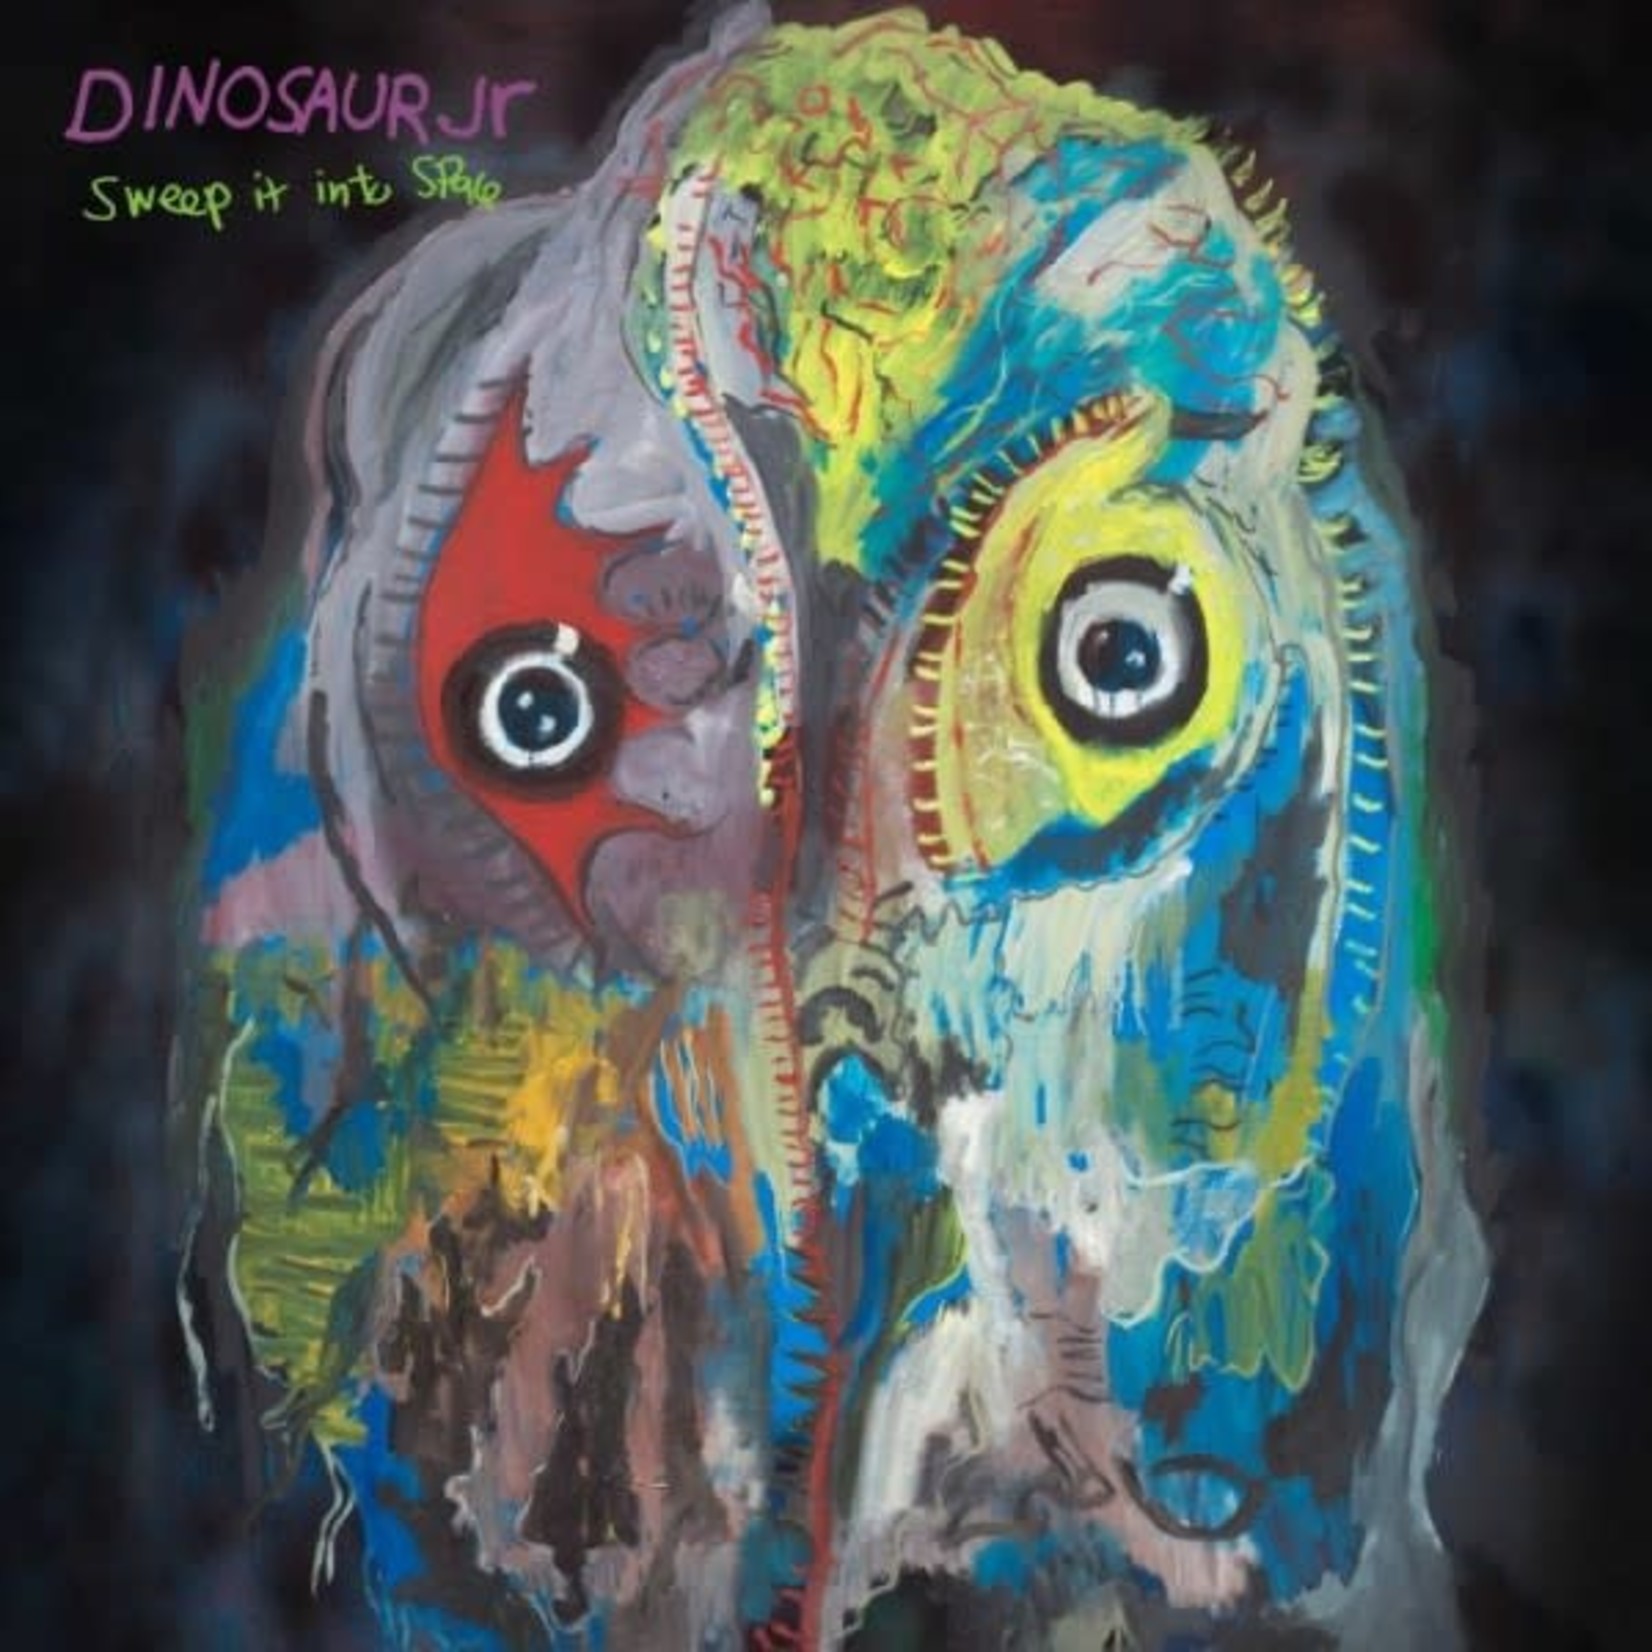 [New] Dinosaur Jr. - Sweep It Into Space (translucent purple ripple colour vinyl)